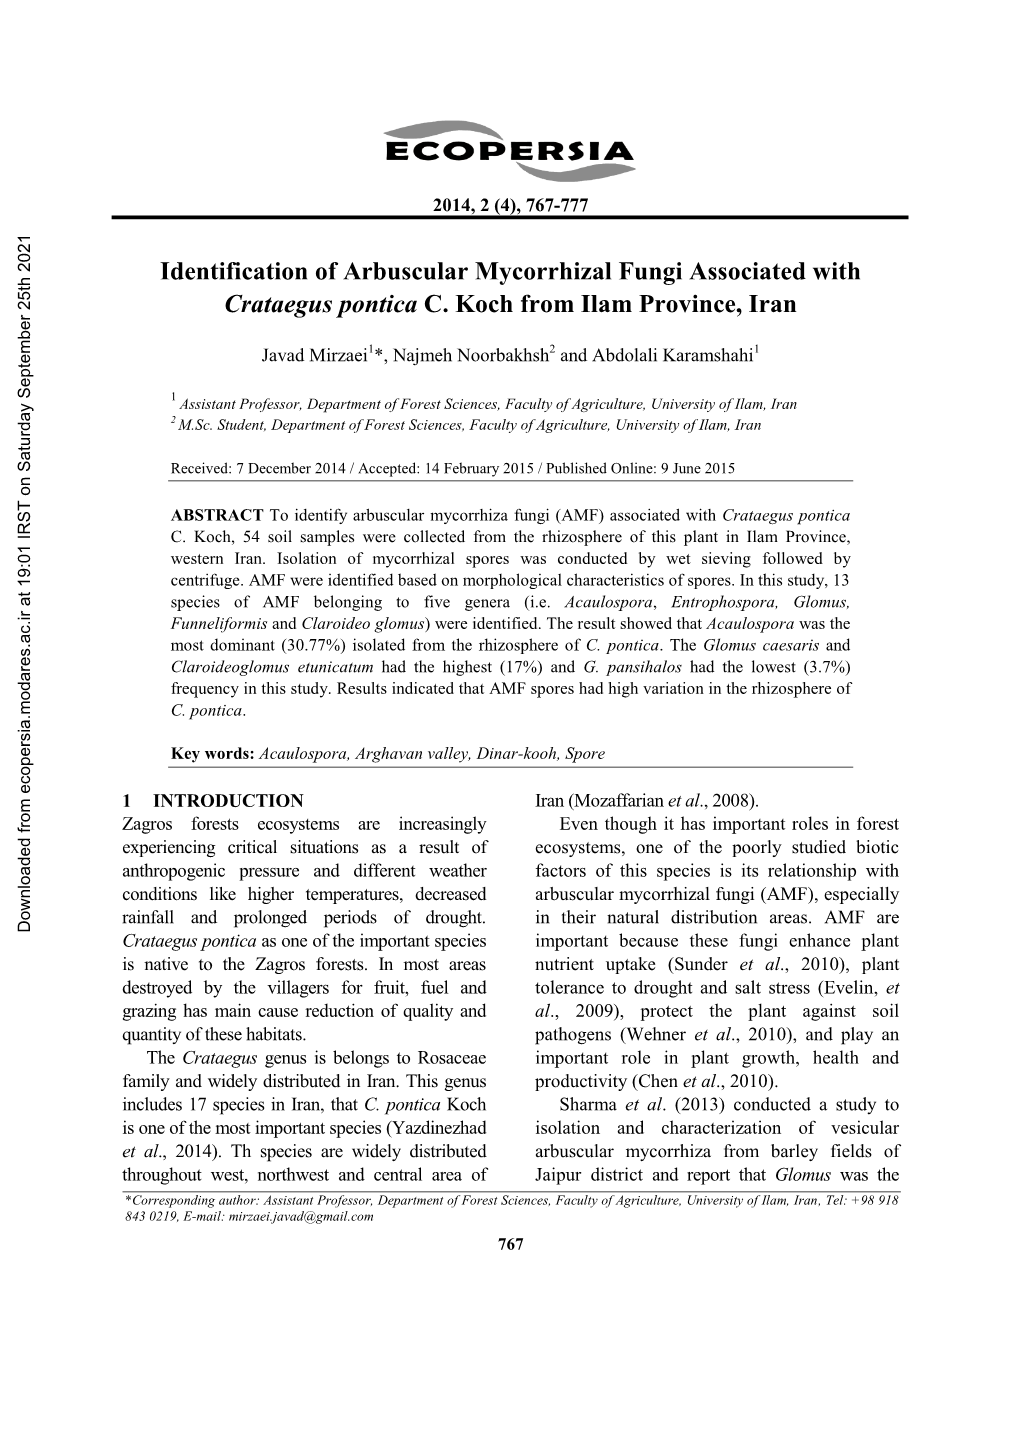 Identification of Arbuscular Mycorrhizal Fungi Associated with Crataegus Pontica C. Koch from Ilam Province, Iran